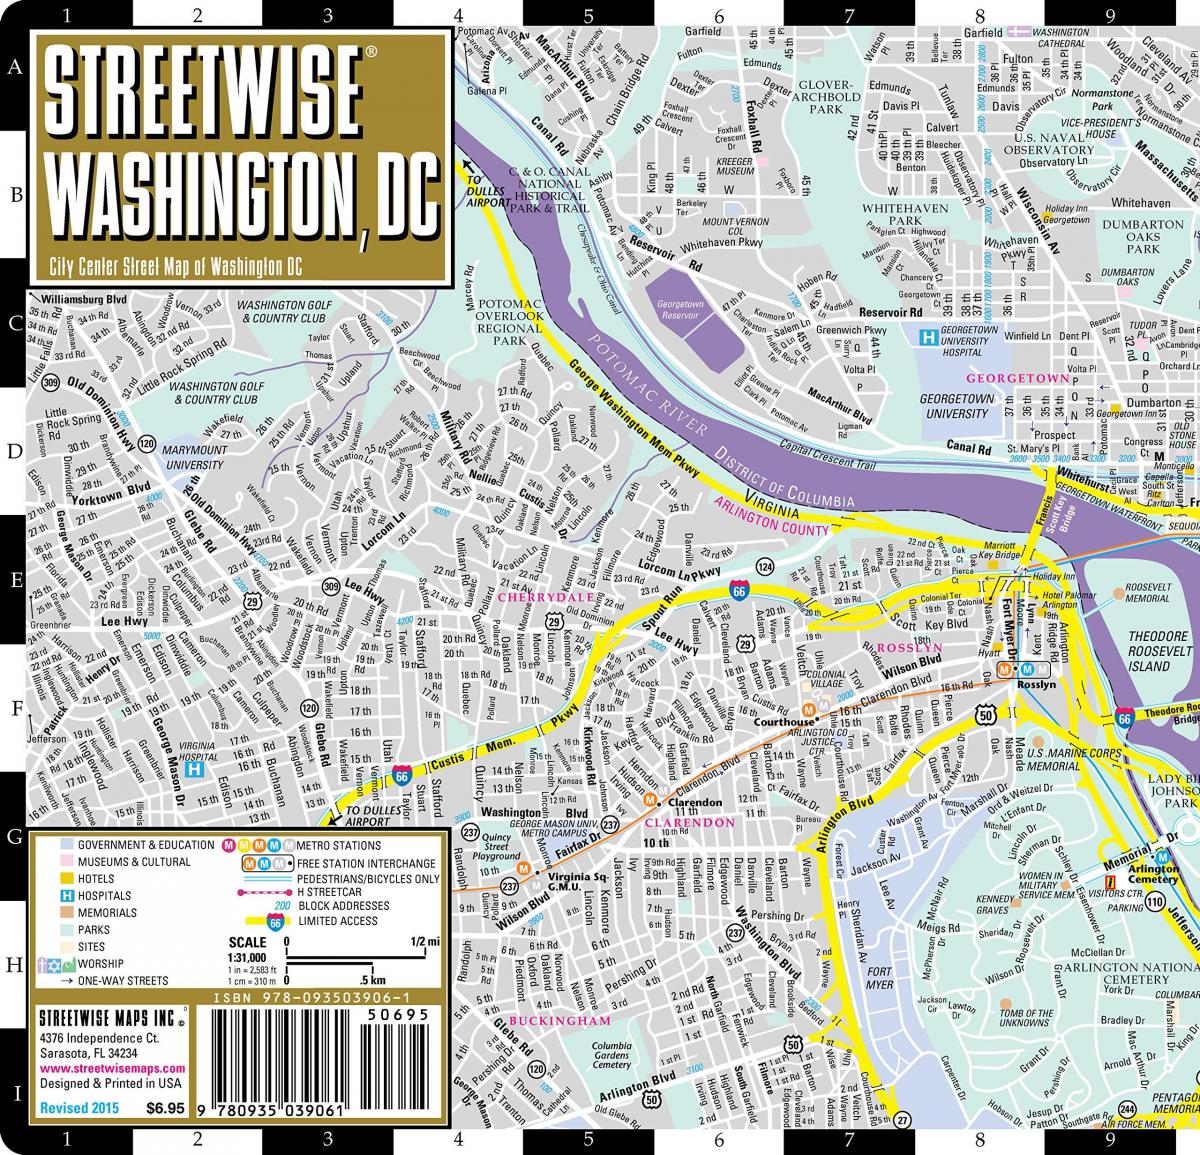 kort over streetwise washington dc